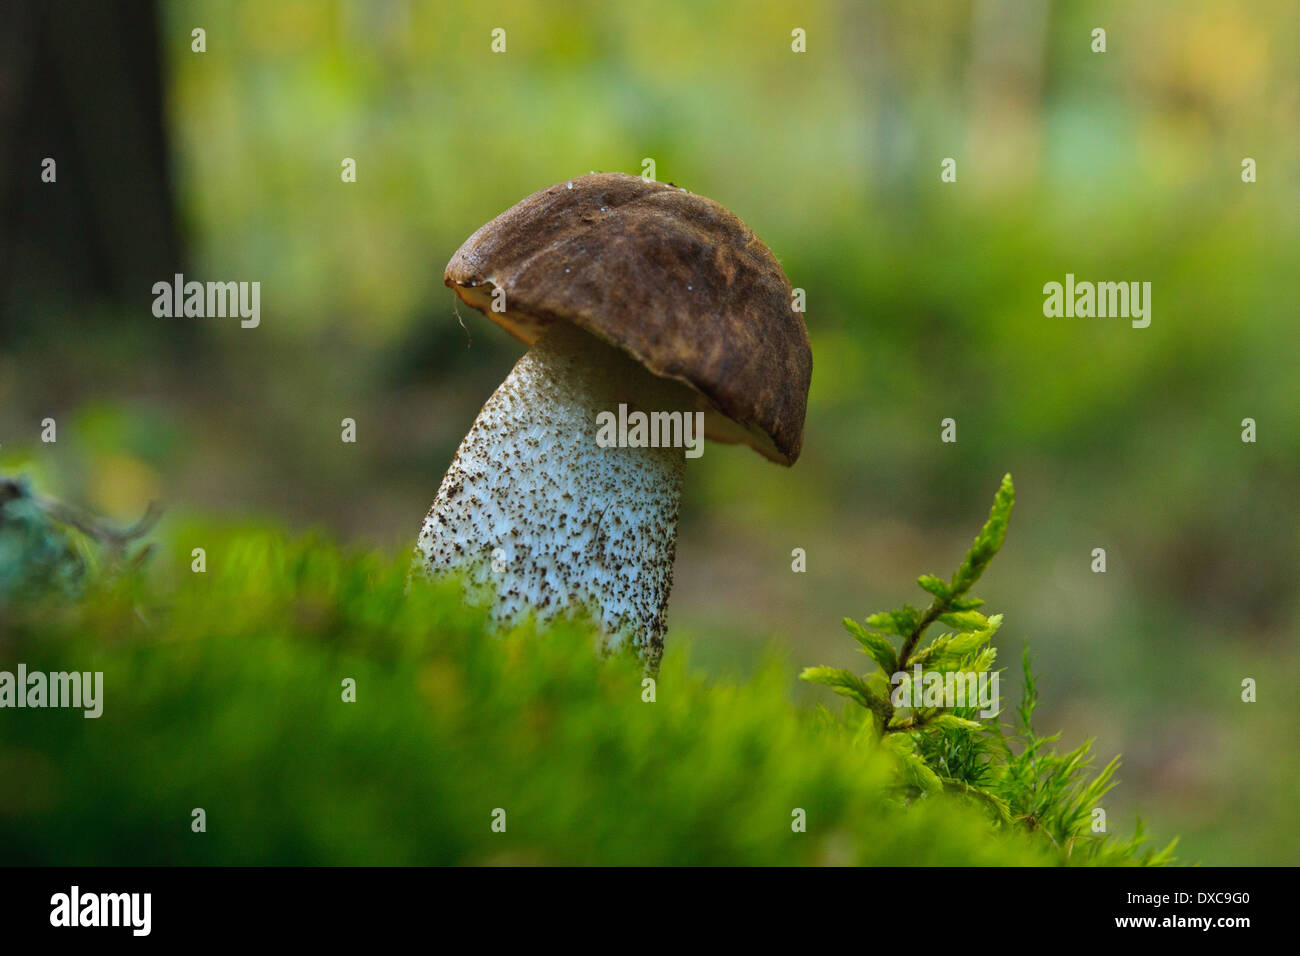 Mushroom in the grass Stock Photo